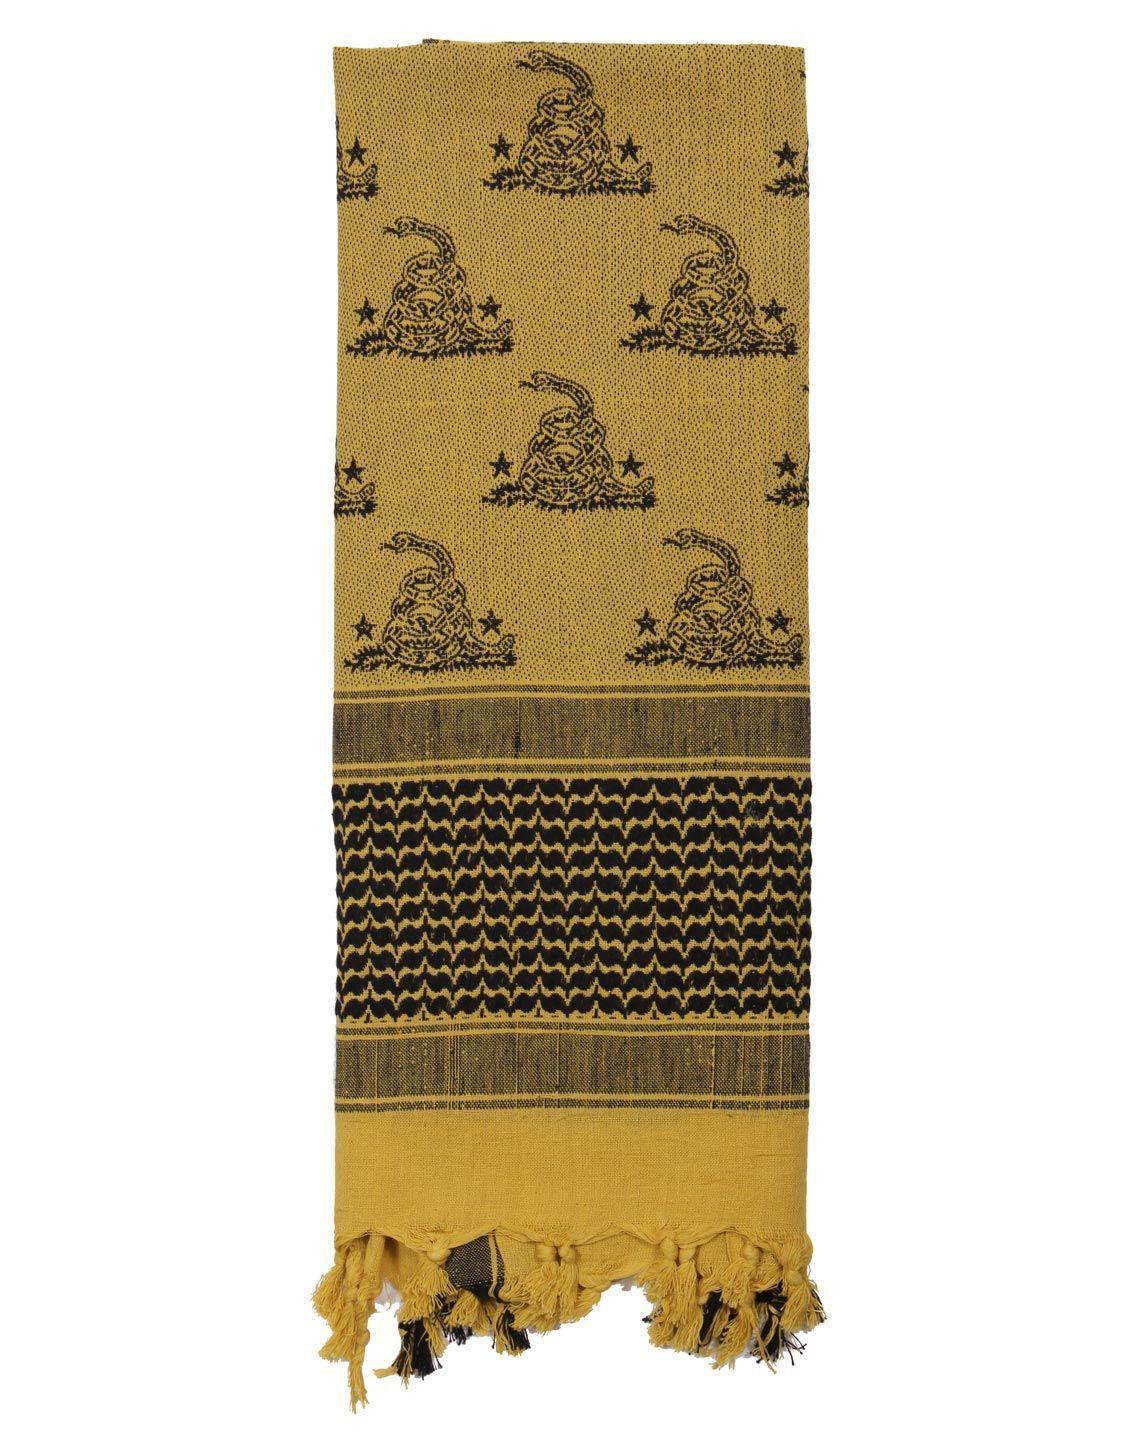 #2 - Rothco Partisan Tørklæde - 'Gadsden Snake Design' (Desert Sand, One Size)